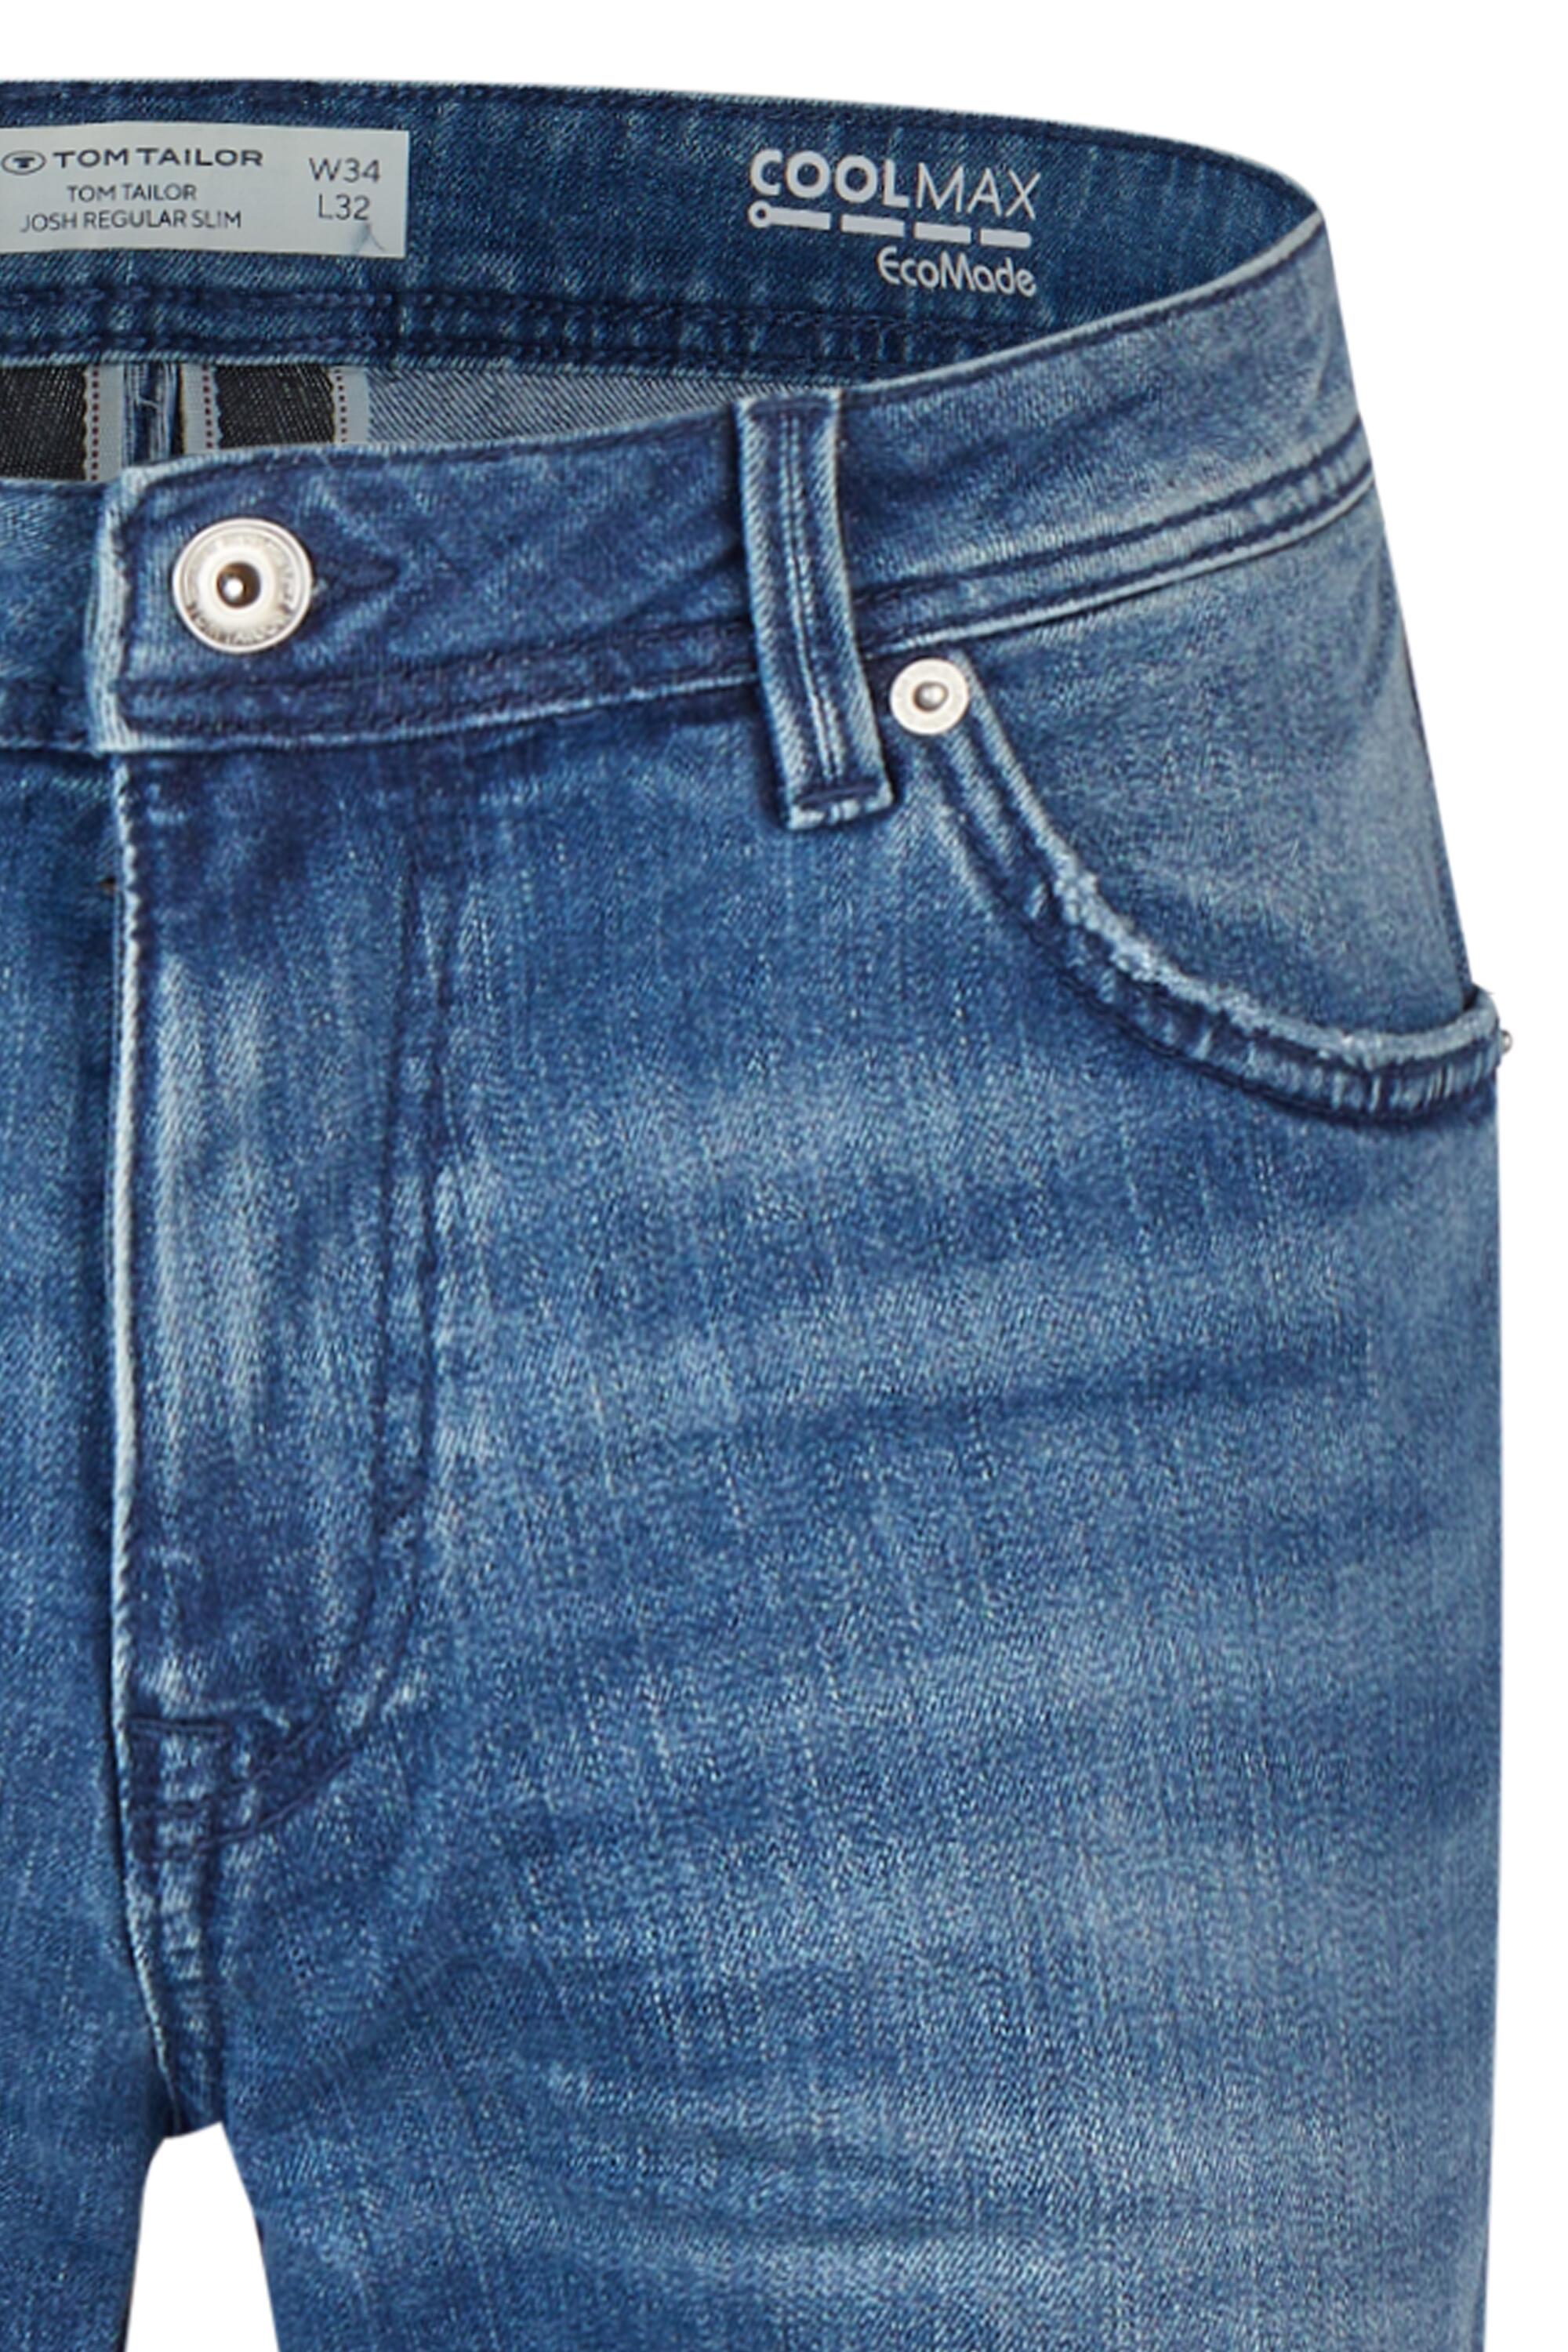 Jeans Josh Modernfit von Tom Tailor | hellblau | 33/34 | I0130345-8